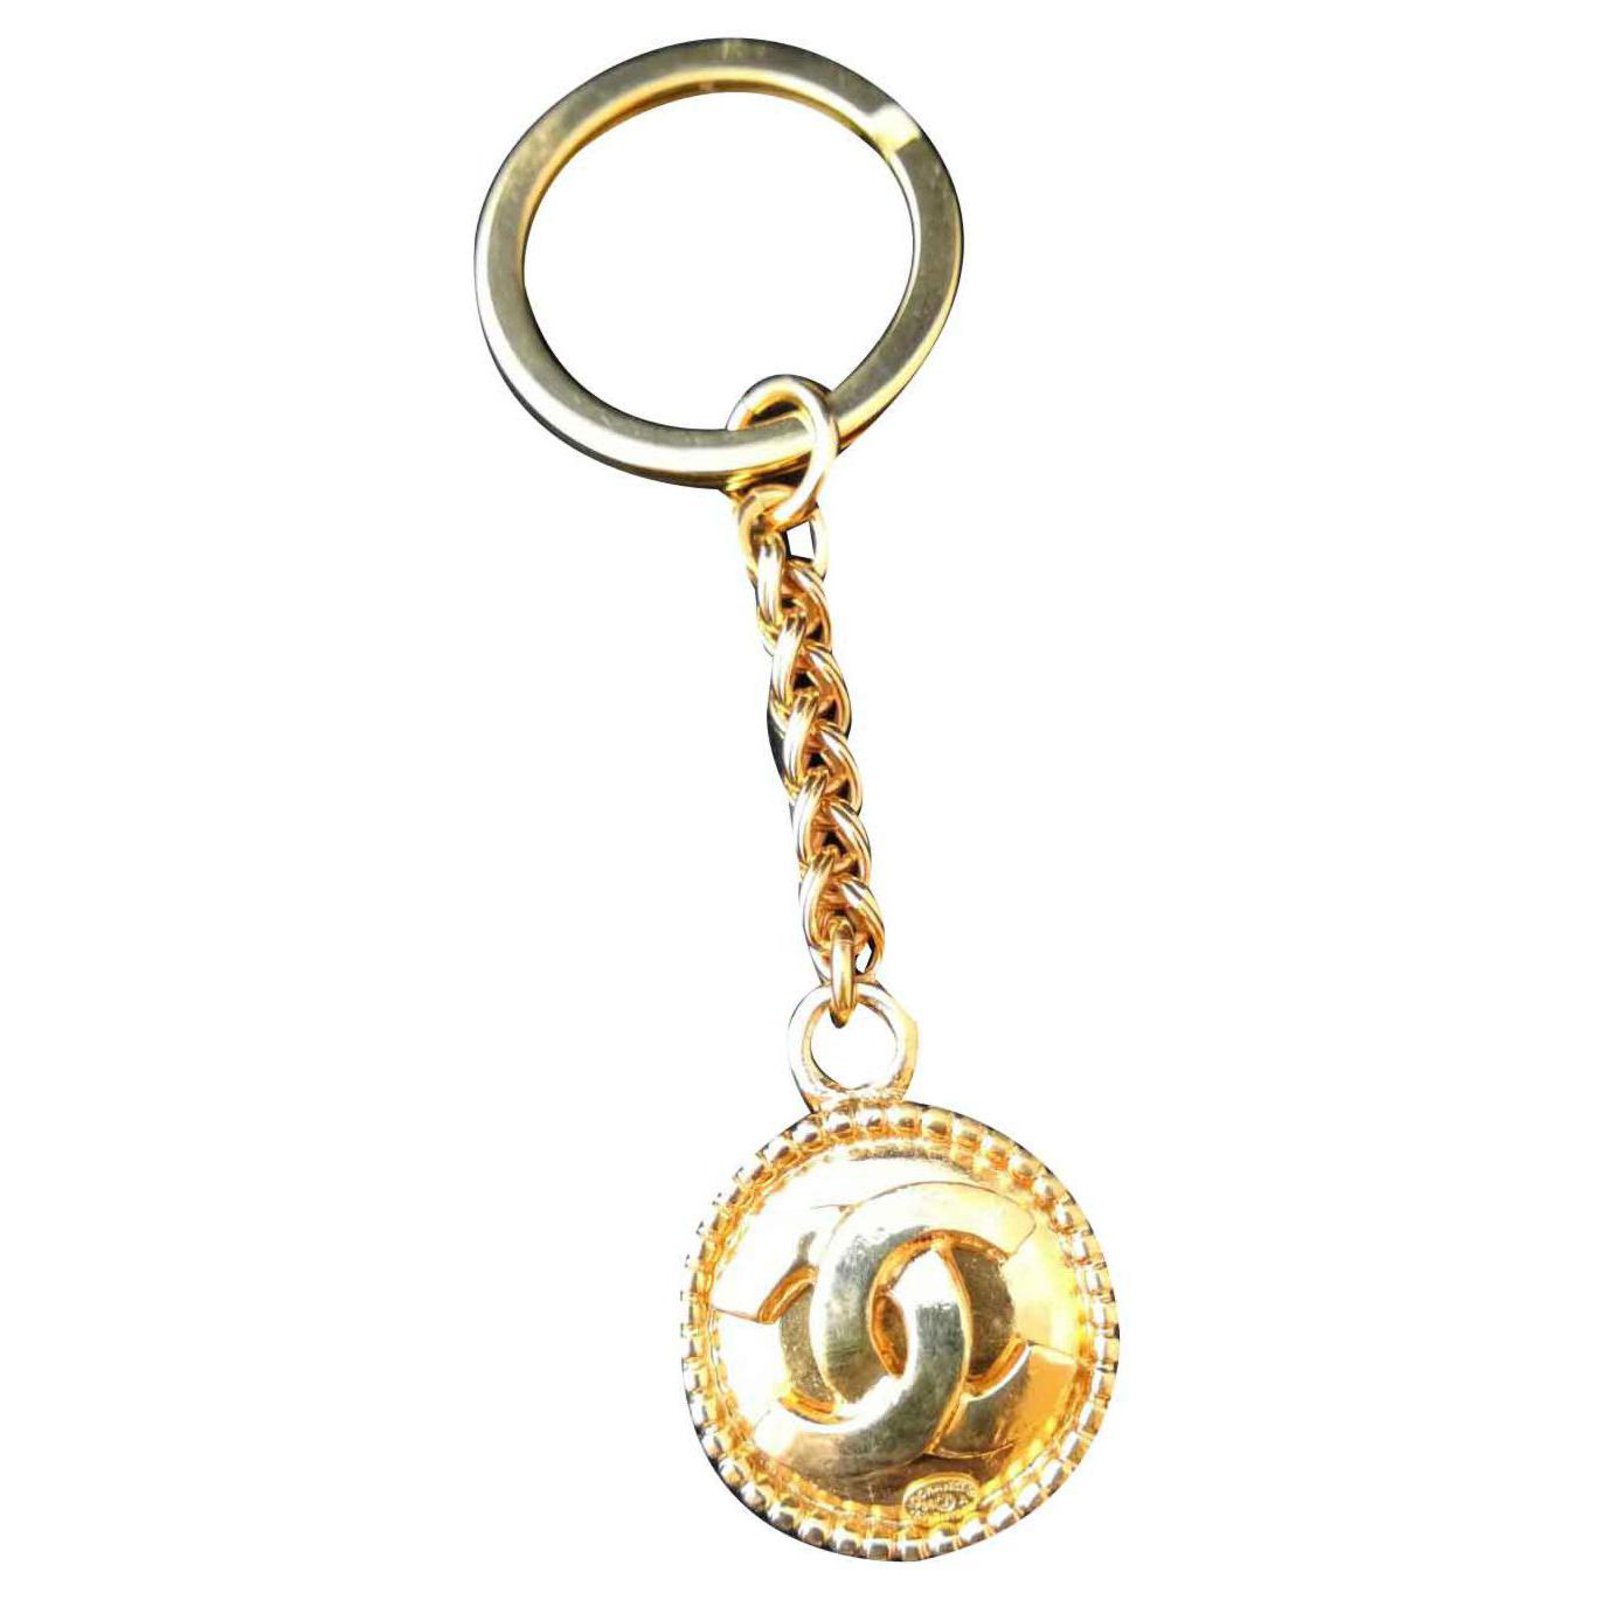 Lot 326 - Chanel Logo Key Ring